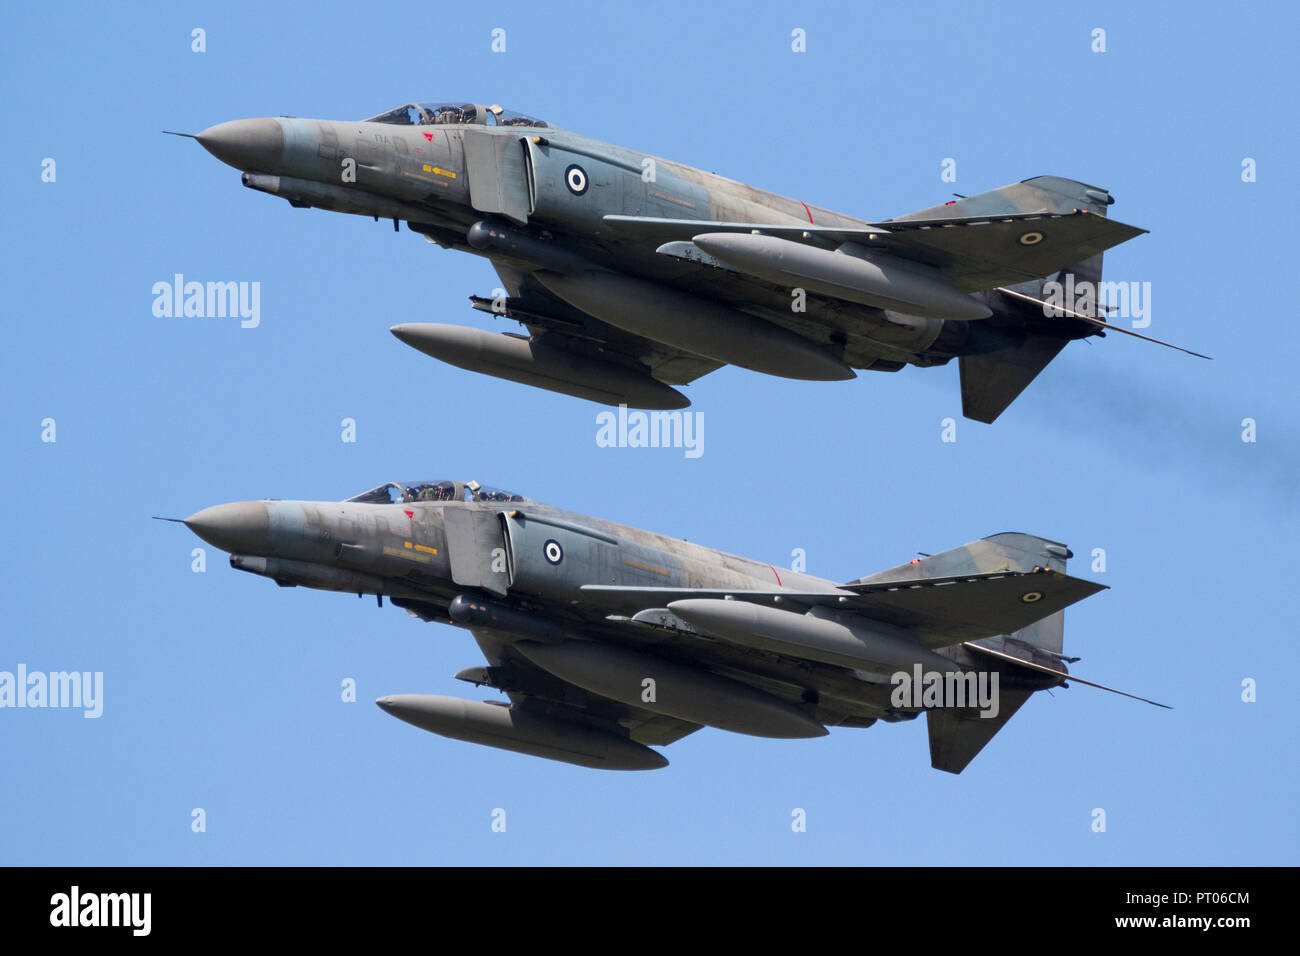 FLORENNES, Belgien - May 15, 2017: Zwei griechische Luftwaffe F-4 E Phantom Kampfflugzeuge im Formationsflug. Stockfoto